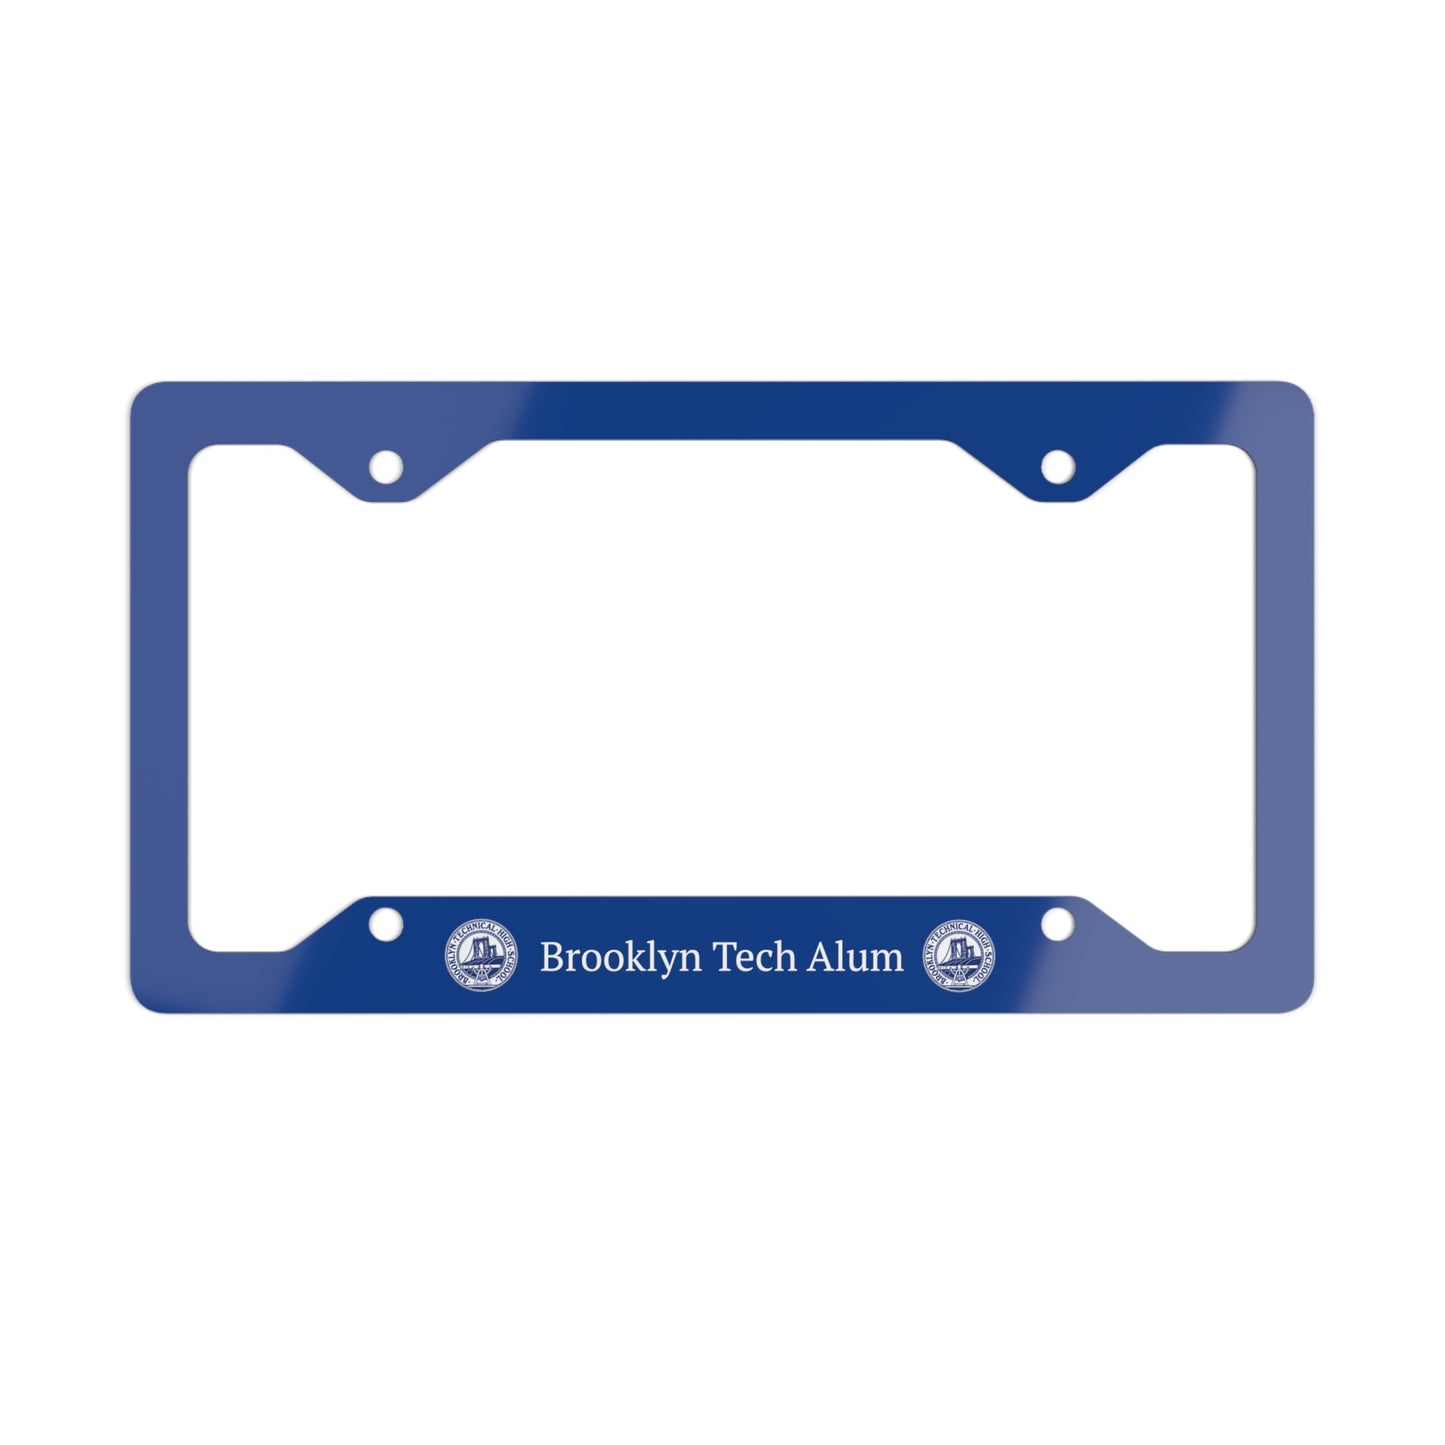 Brooklyn Tech Alum License Plate Frame